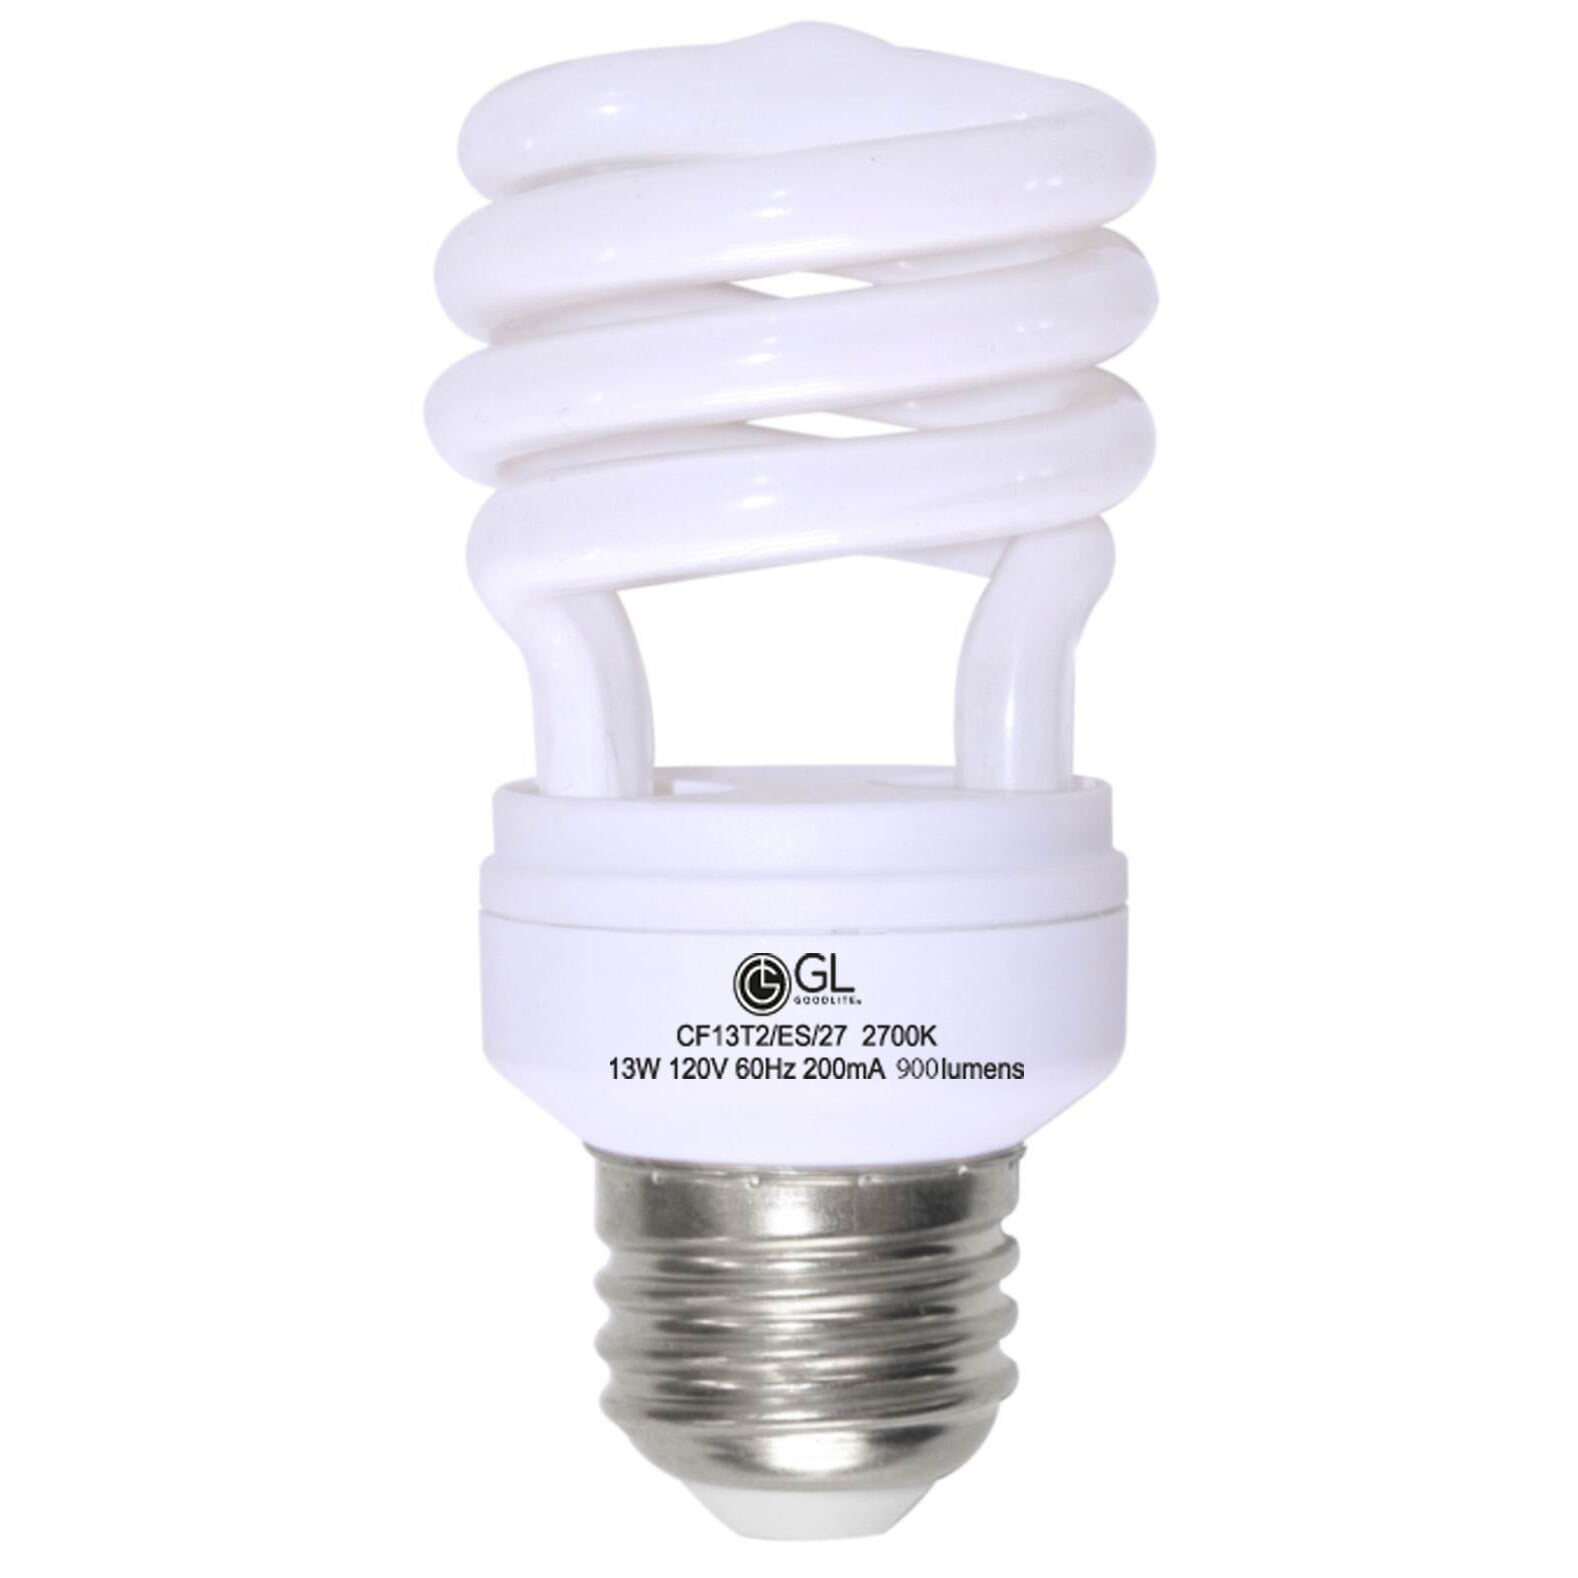 GE Lighting Energy Smart CFL 97619 13-Watt 900-Lumen Triple Biax Light Bulb with Gx24Q-1 Base 10-Pack 